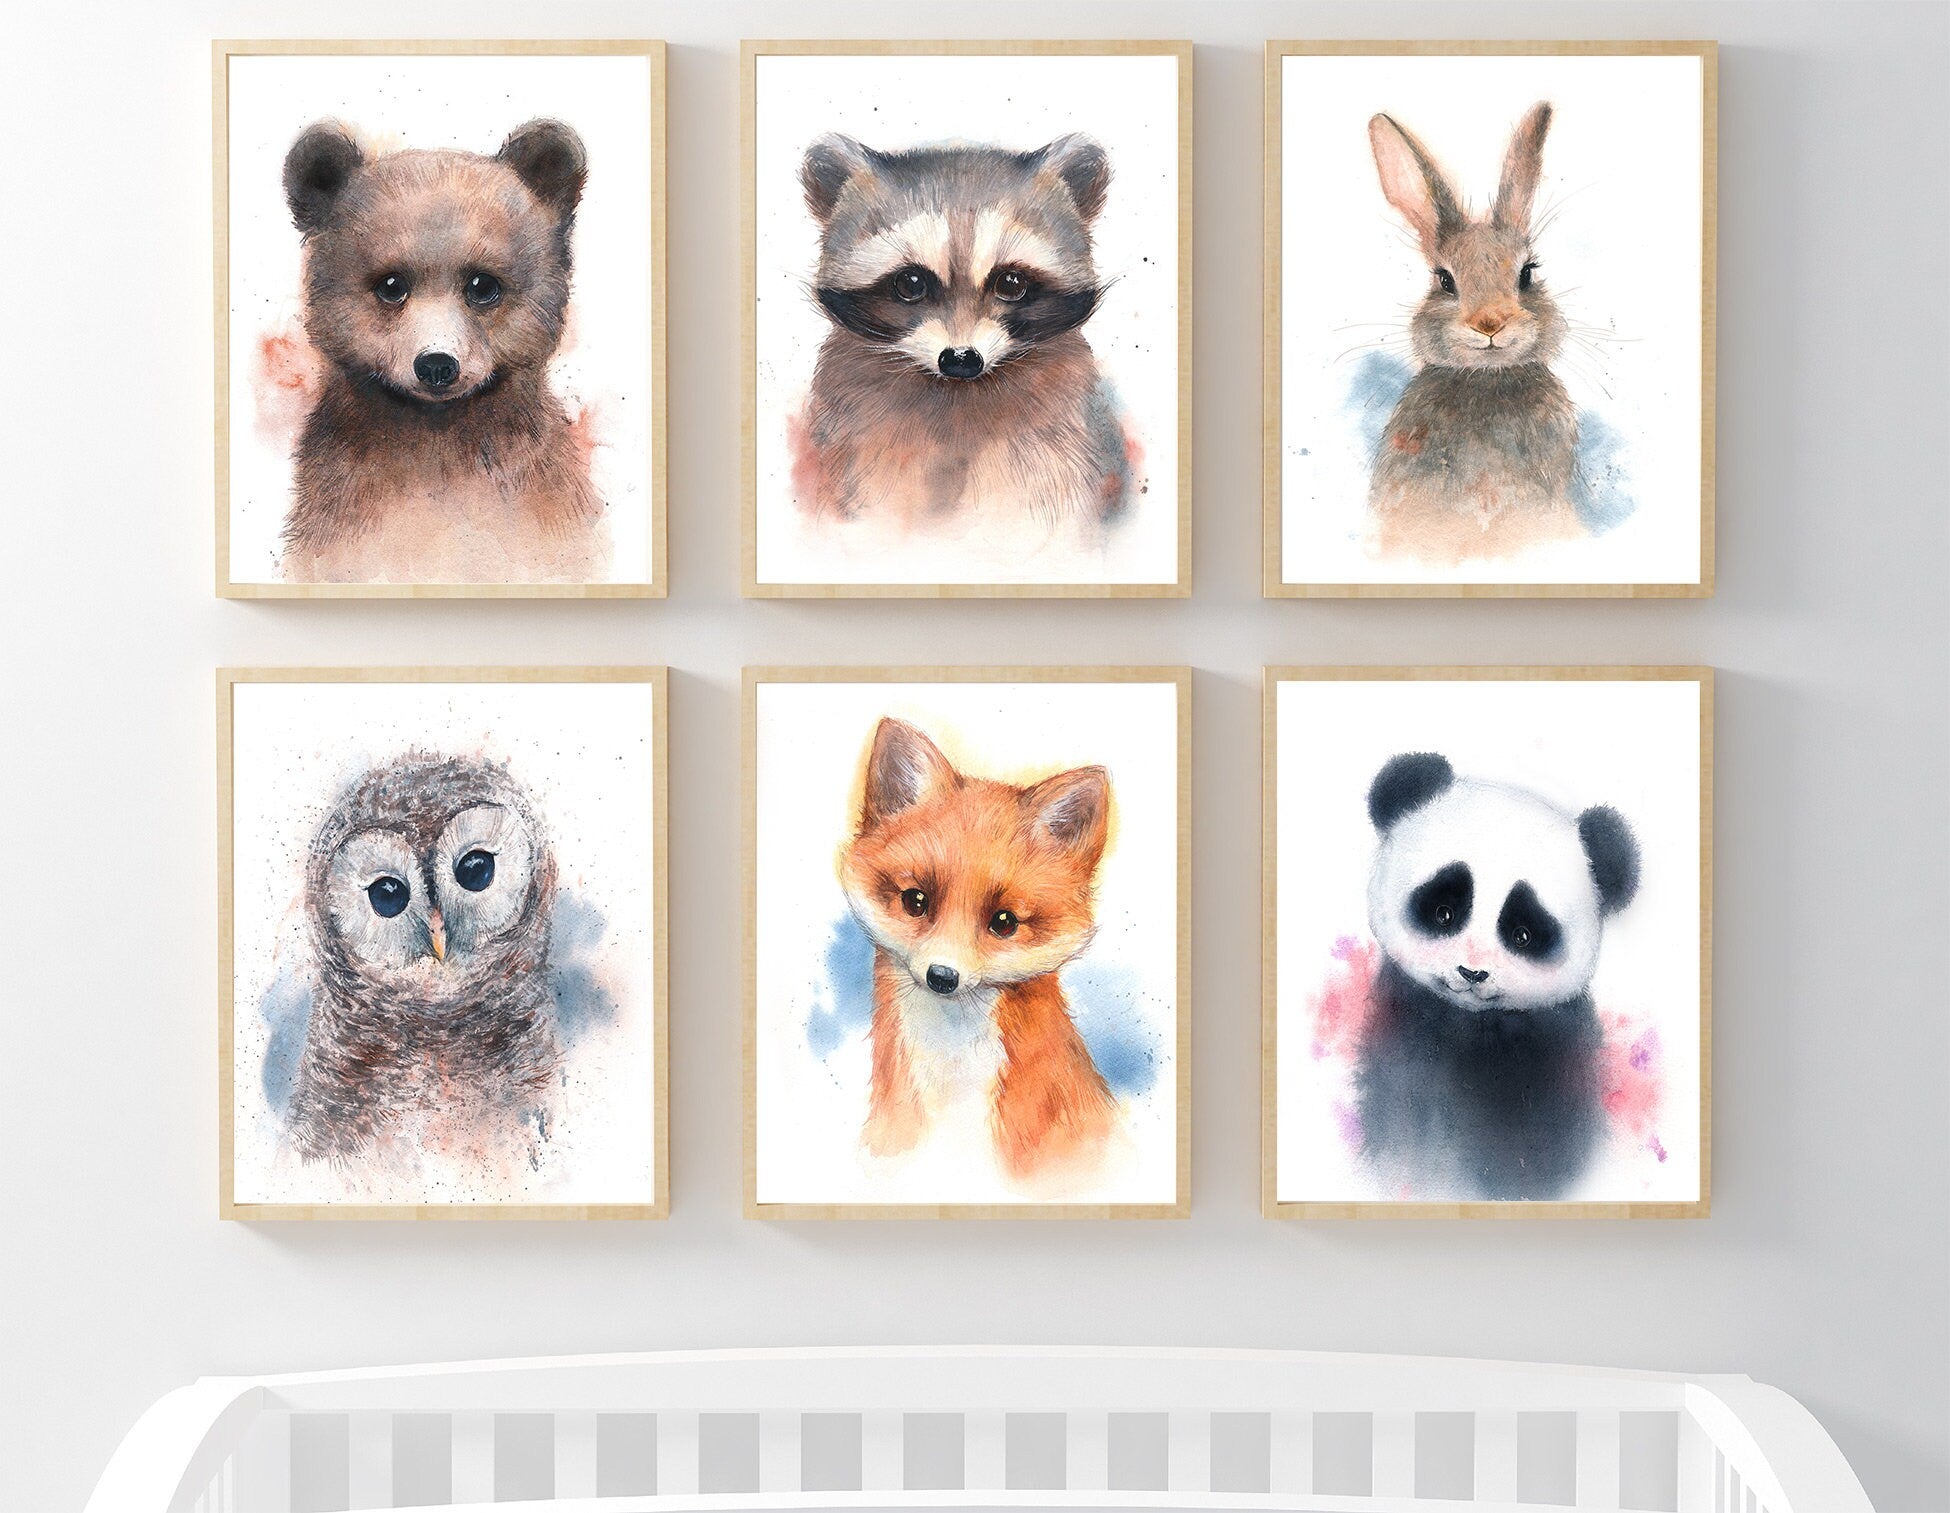 Baby Raccoon Print, Baby Animal, Nursery Animal Print, Raccoon Decor, Raccoon Wall Decor, Unframed Art Print, Baby Raccoon Nursery Print